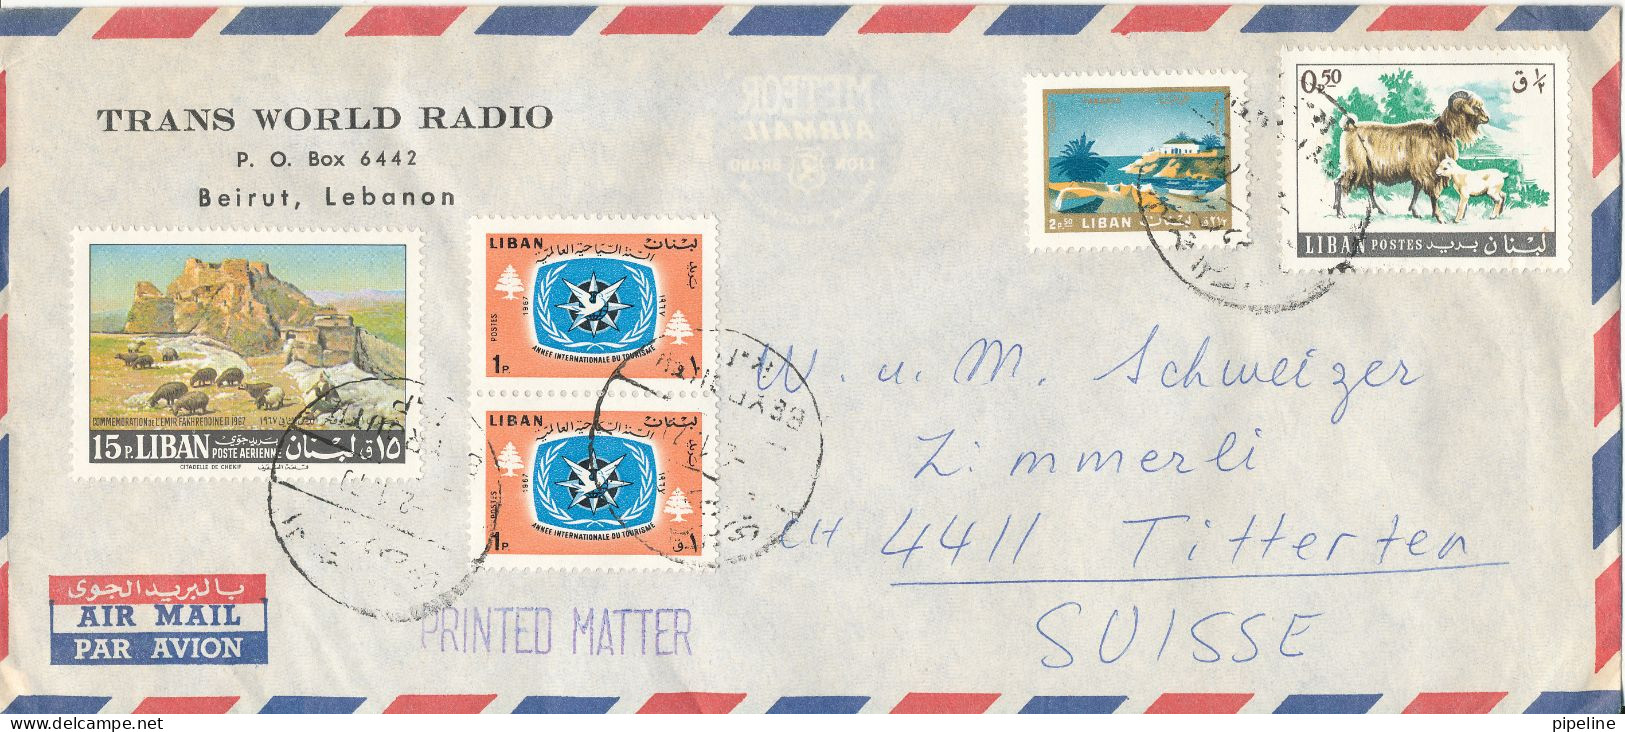 Lebanon Air Mail Cover Sent Printed Matter To Switzerland Beyrouth 2-1-1970 - Lebanon